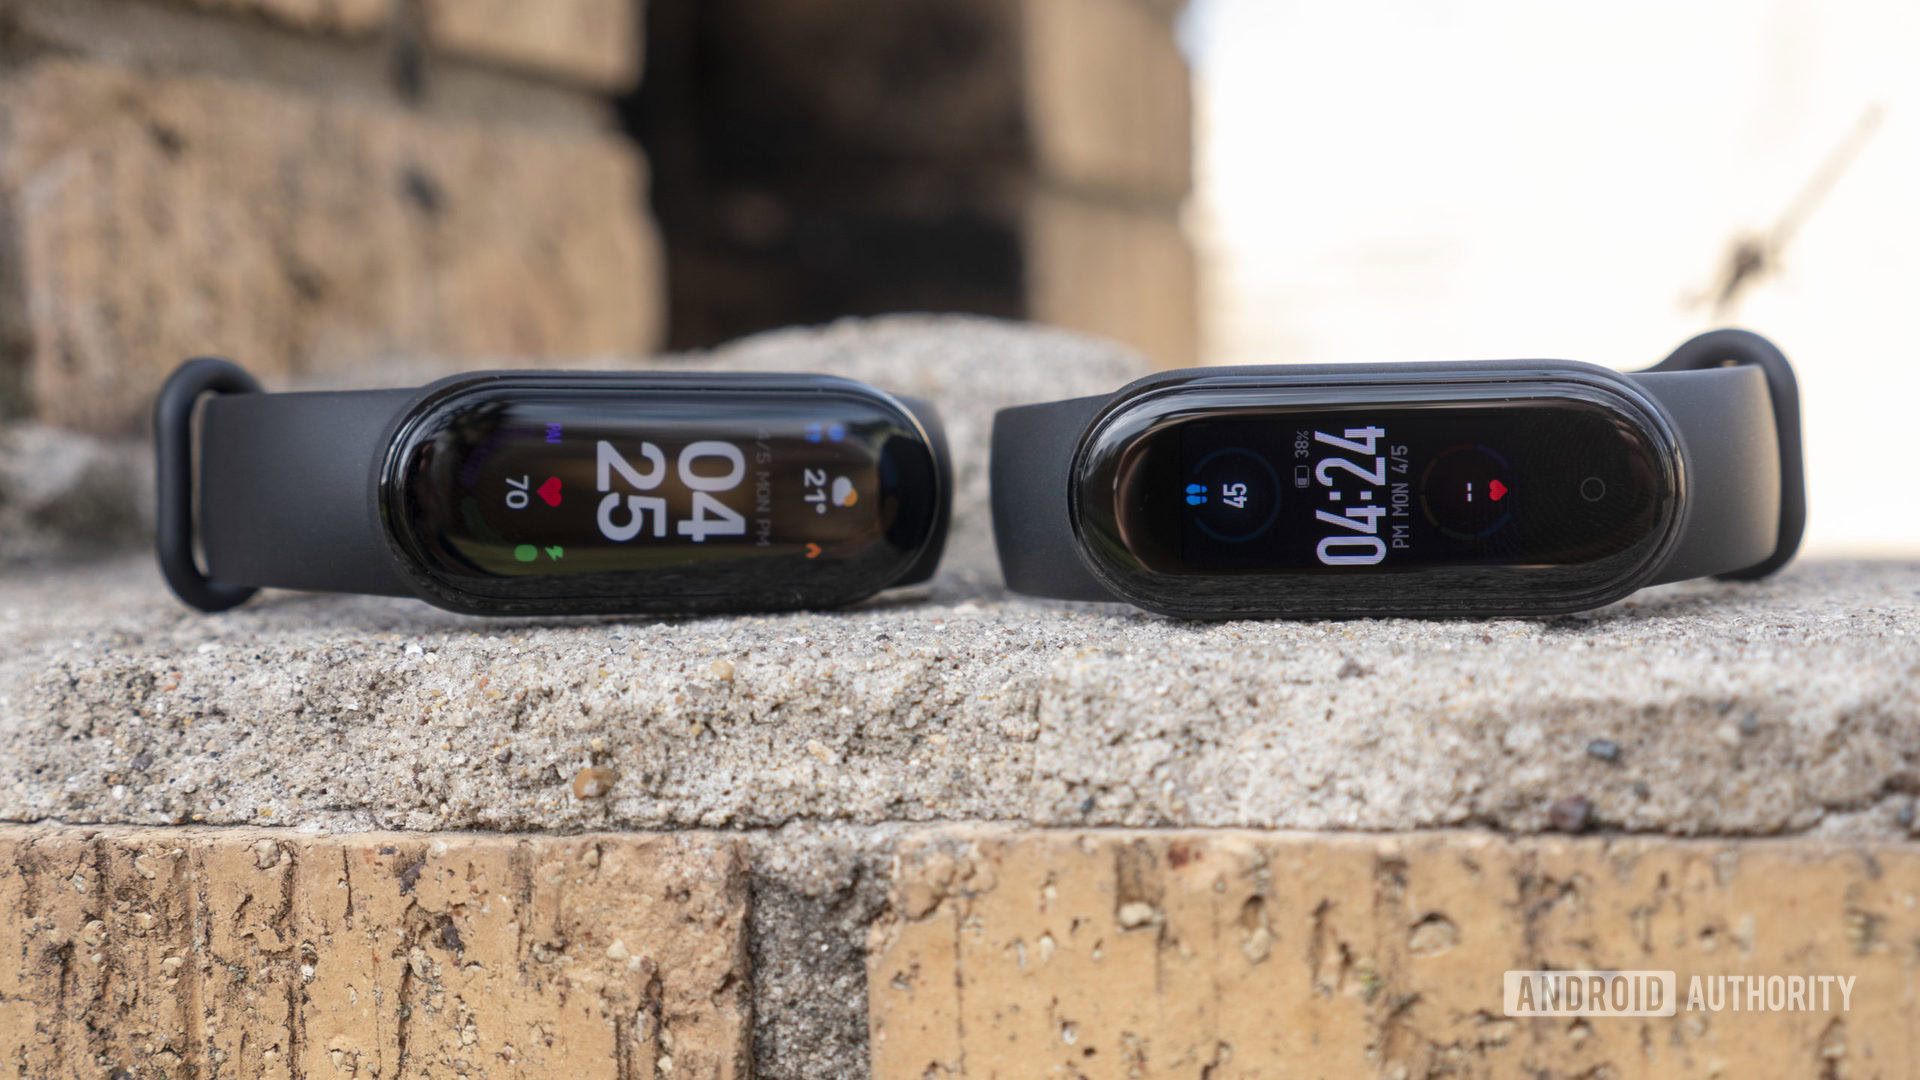 Xiaomi Mi Band 6 vs Mi Band 5: Which fitness tracker should you buy?